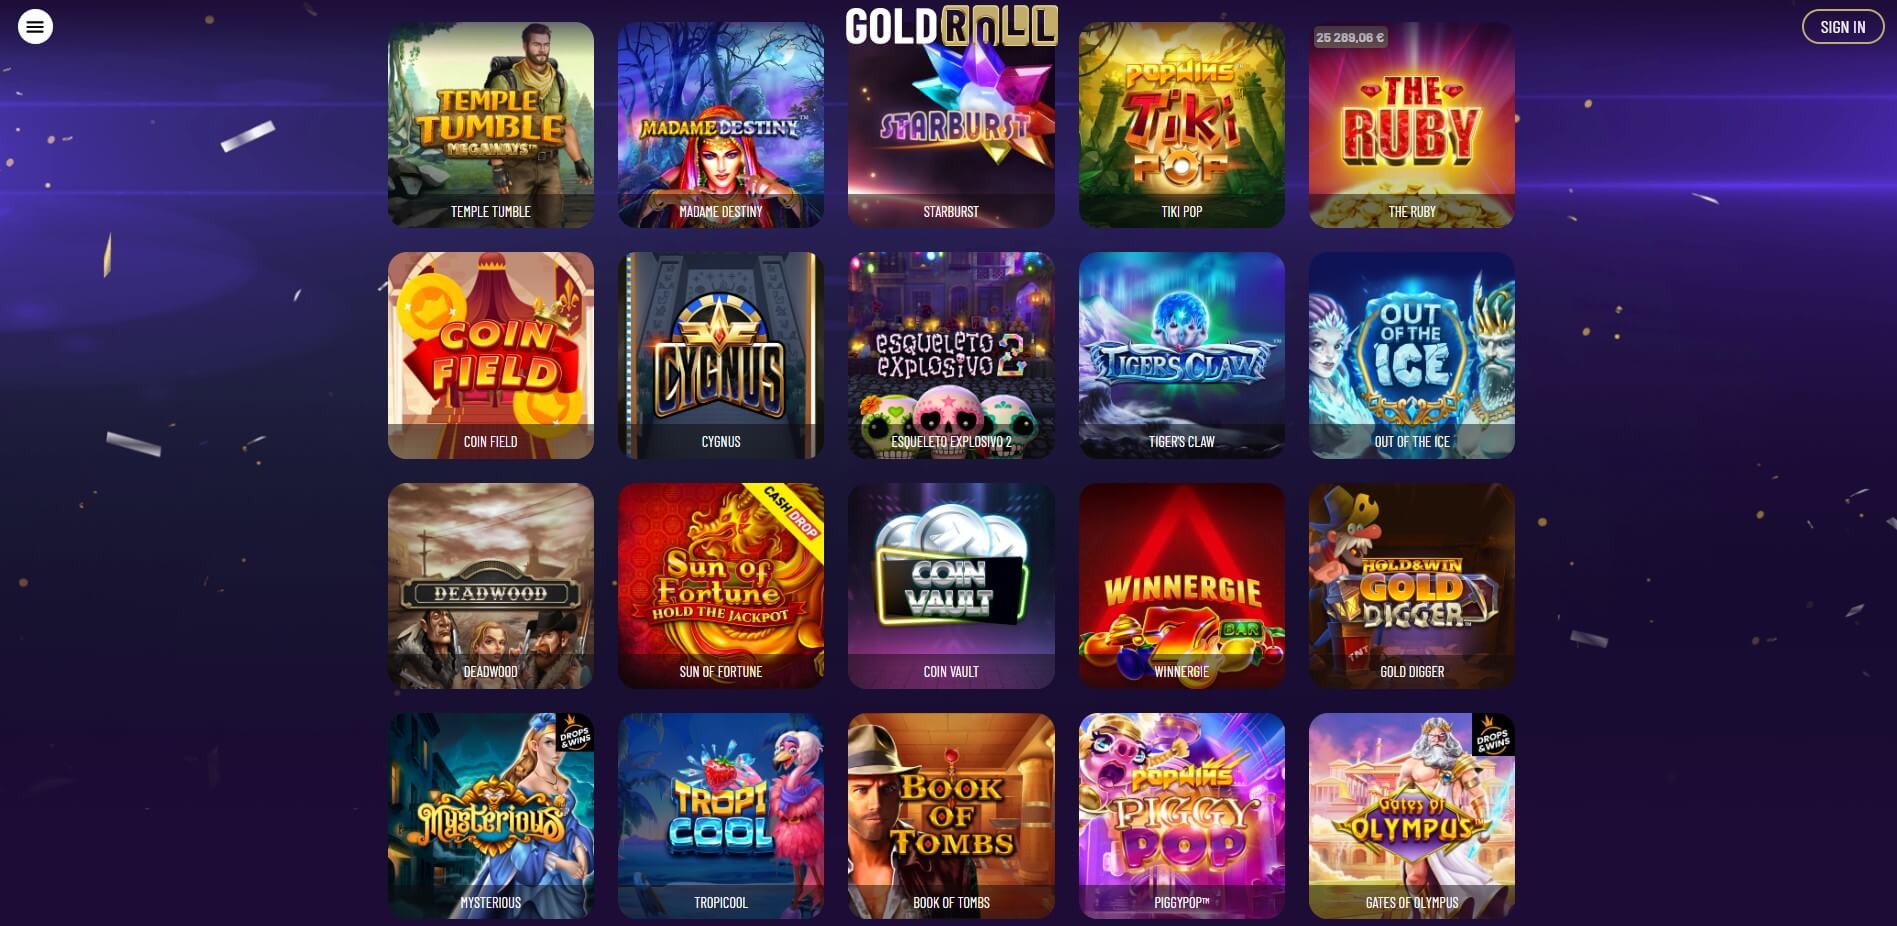 GoldRoll Casino Games